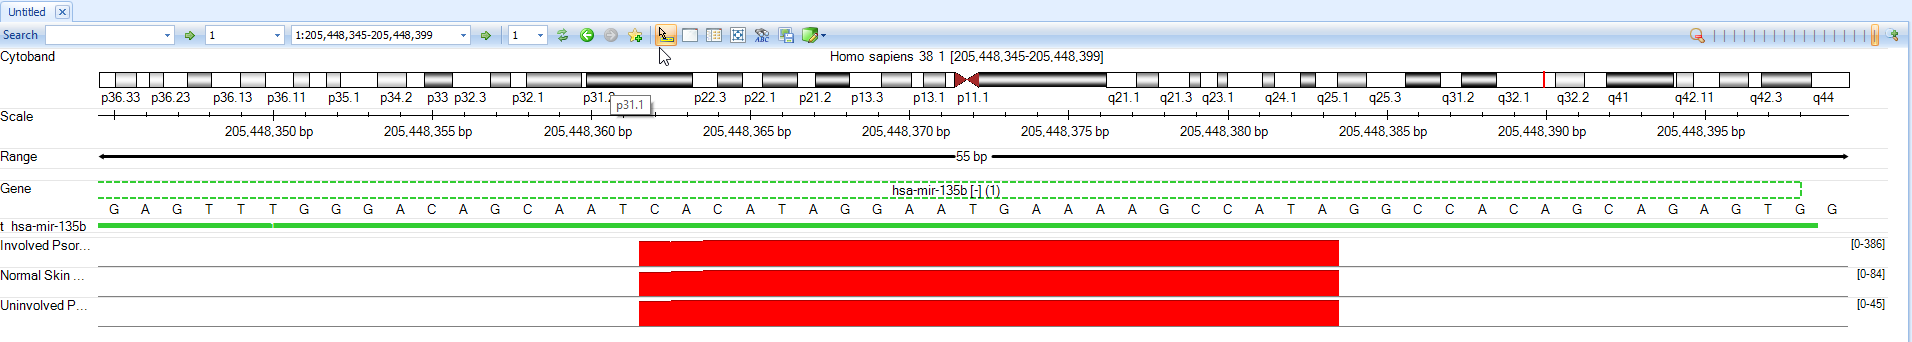 mir_135_genome